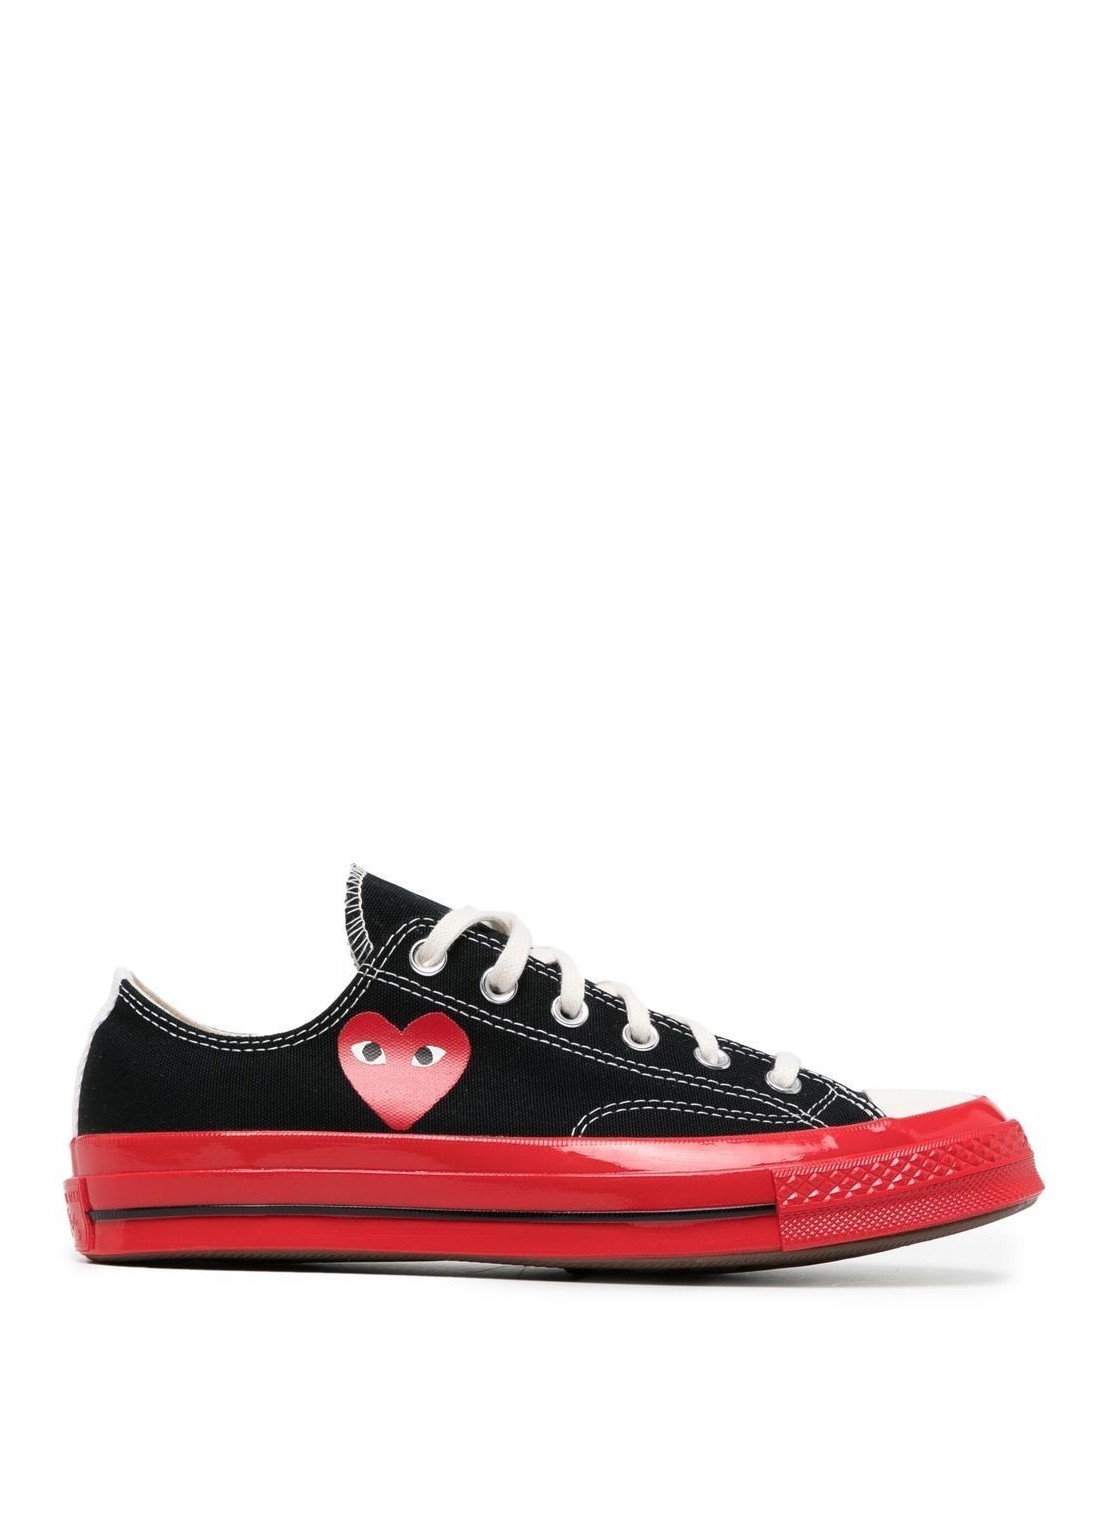 Sneaker comme des garcons sneaker woman converse red sole low top p1k123 black talla 42.5
 